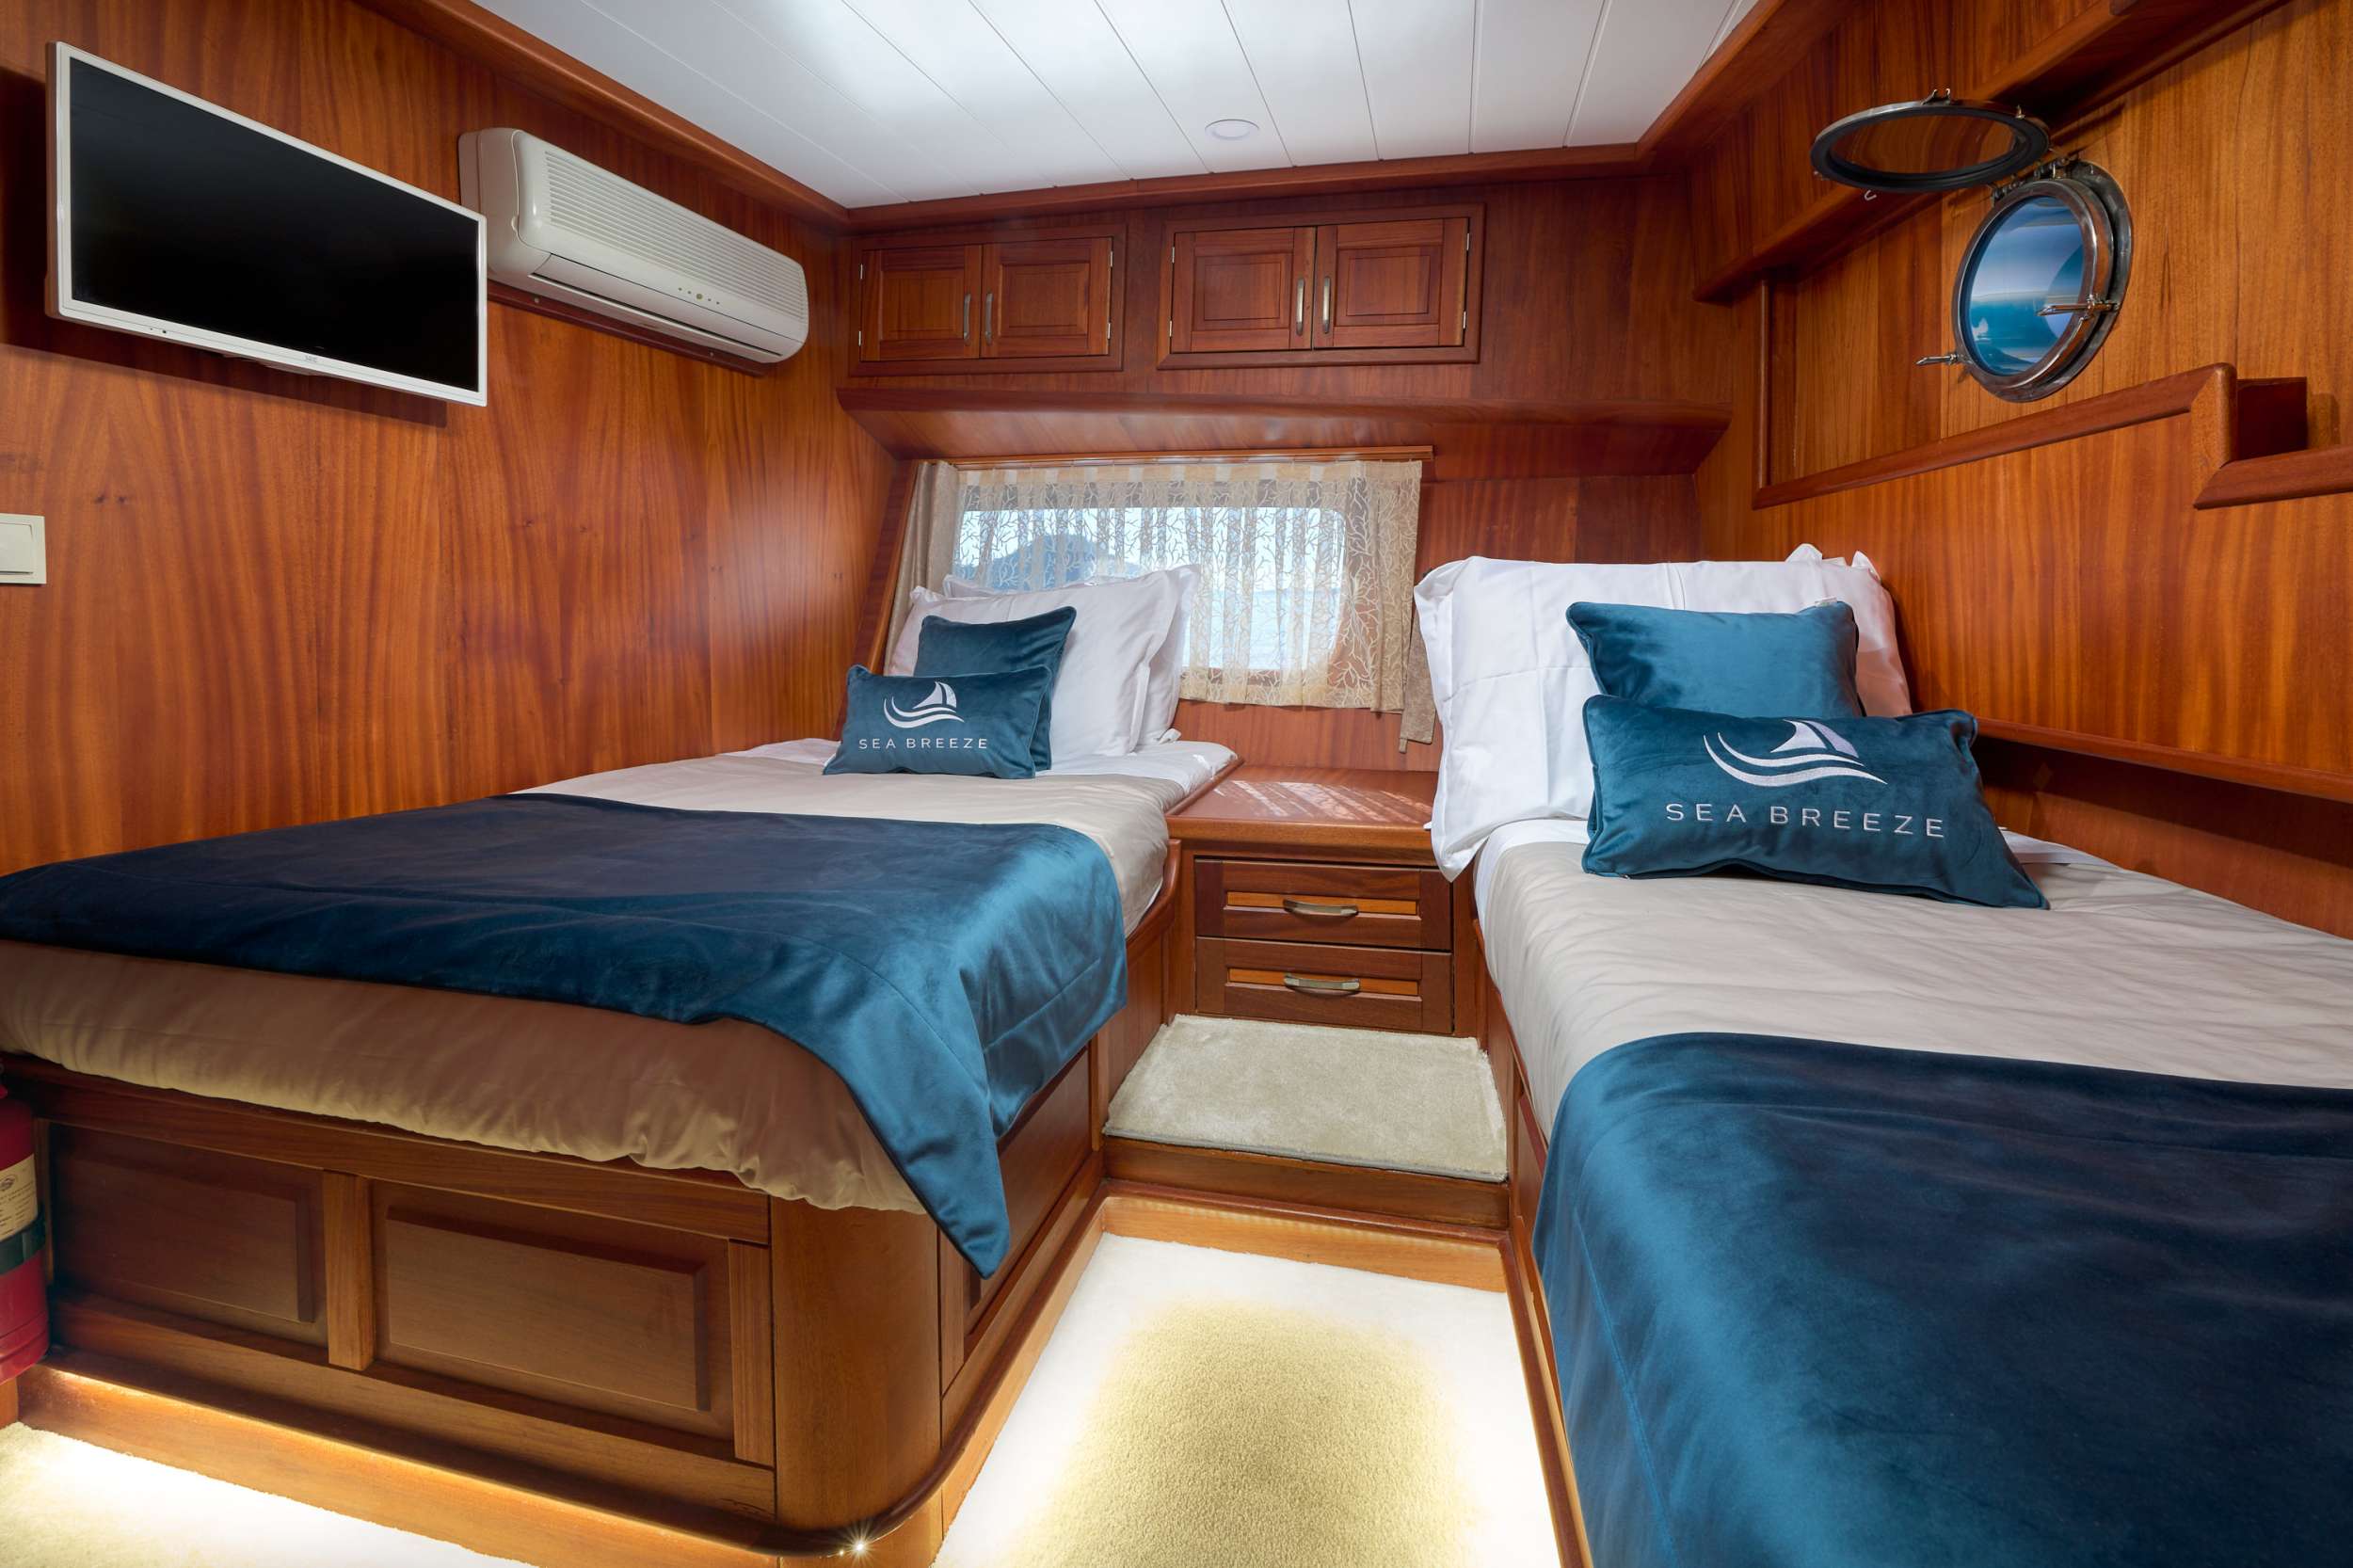 SEA BREEZE Yacht Charter - Guest Cabin